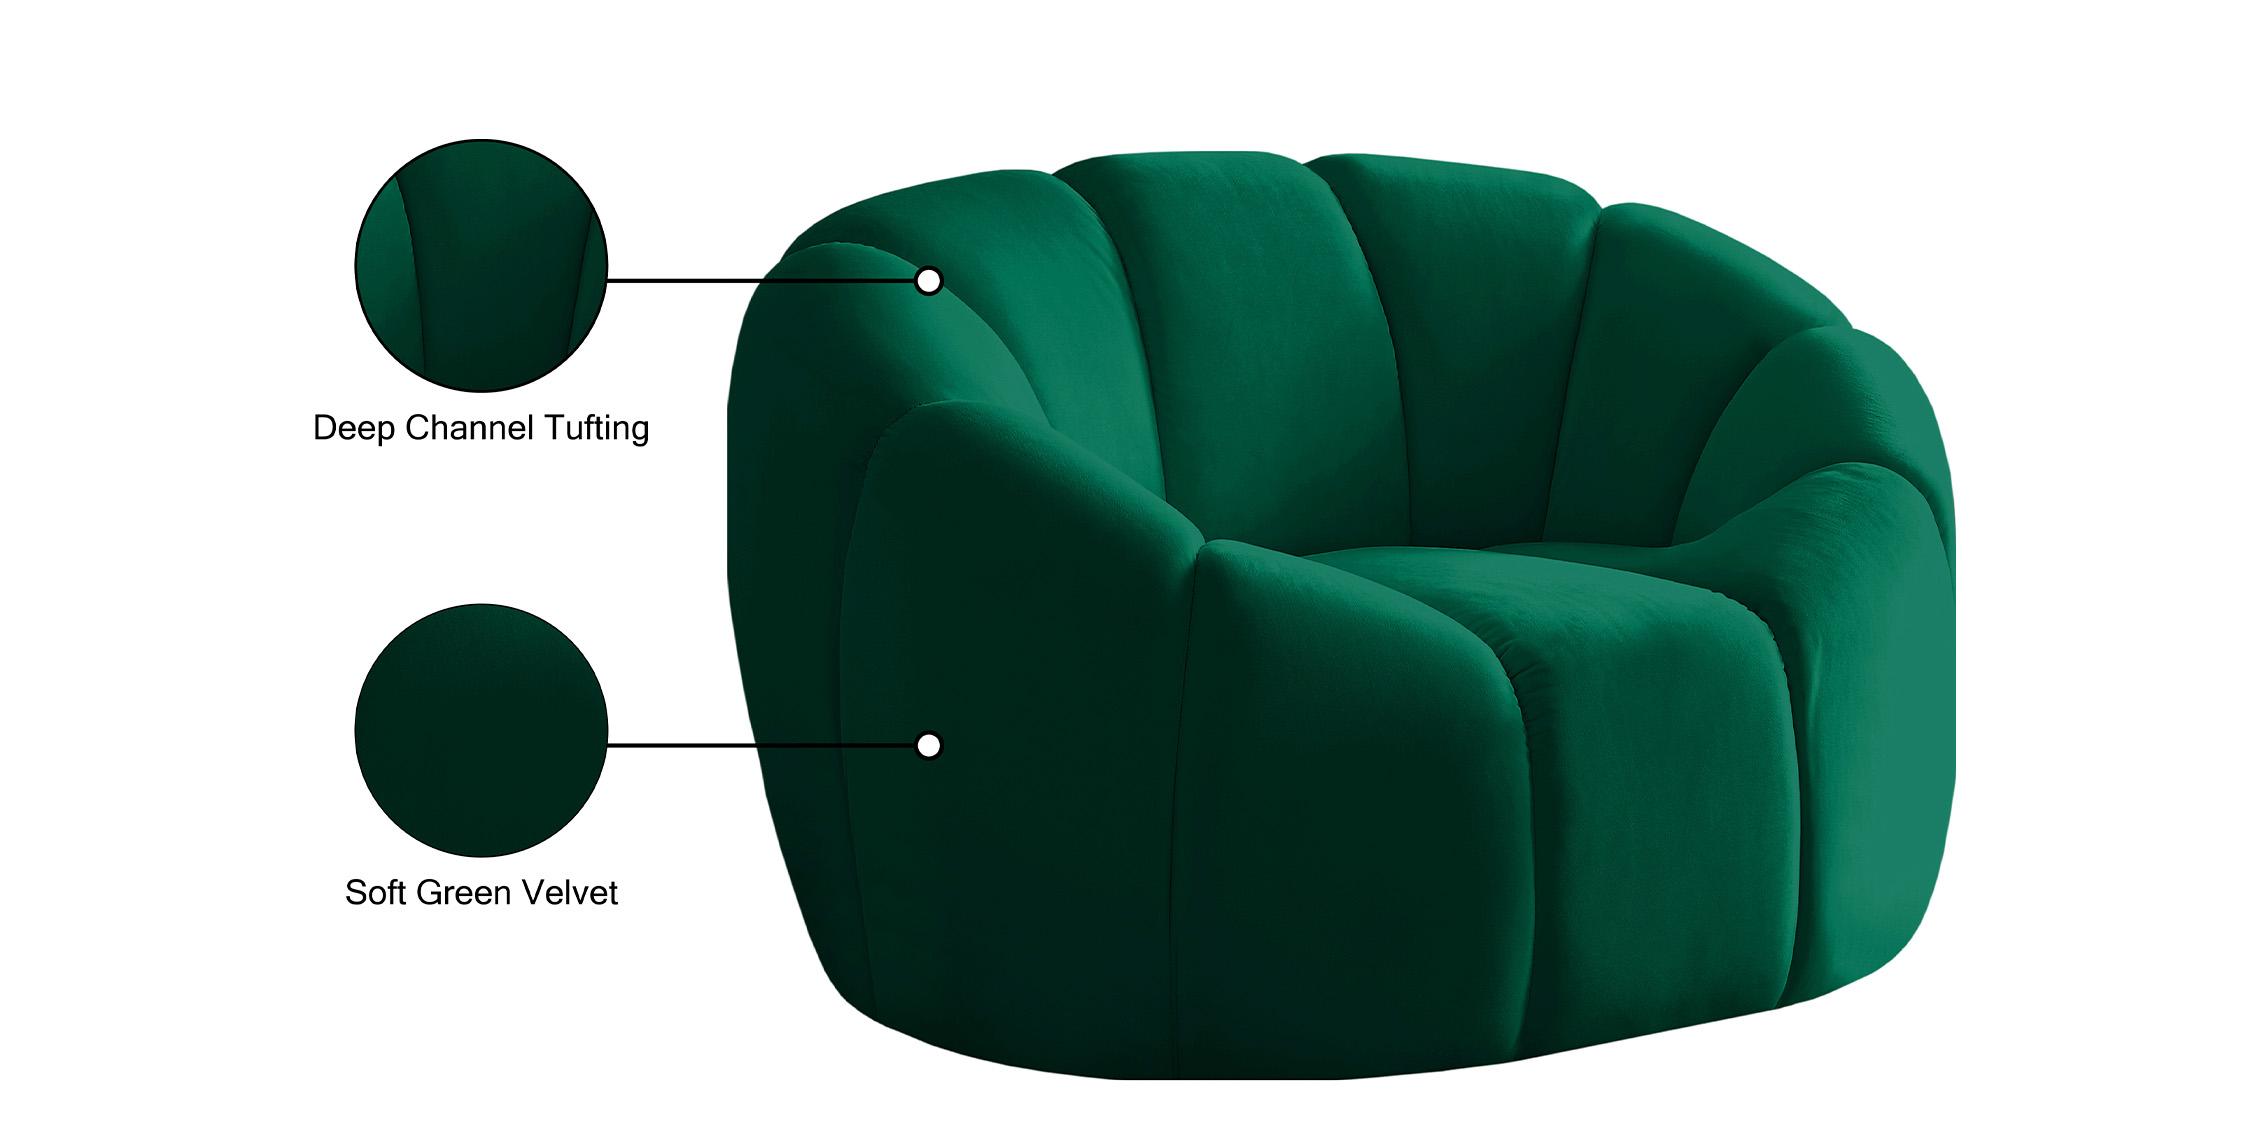 

    
613Green-C Glam GREEN Velvet Channel Tufted Chair ELIJAH 613Green-C Meridian Contemporary
